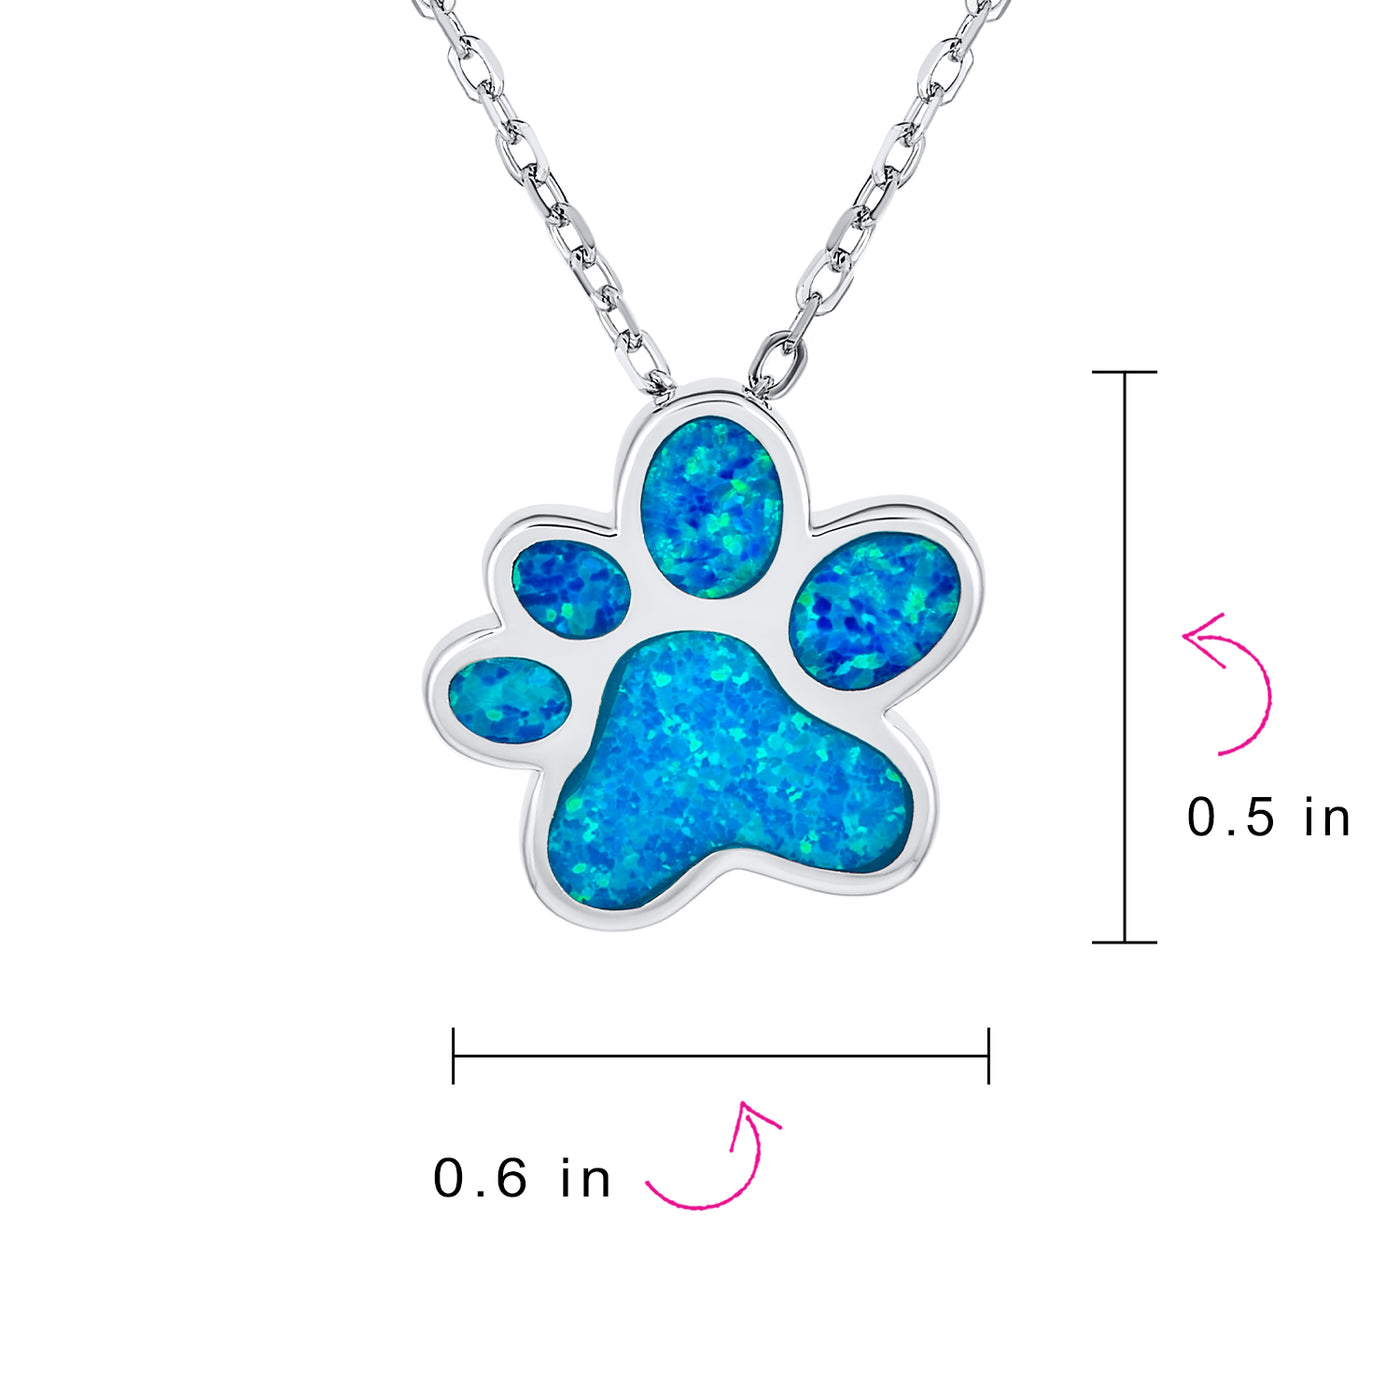 BFF Pet Dog Cat Paw Print Blue Opal Pendant Necklace .925 Silver